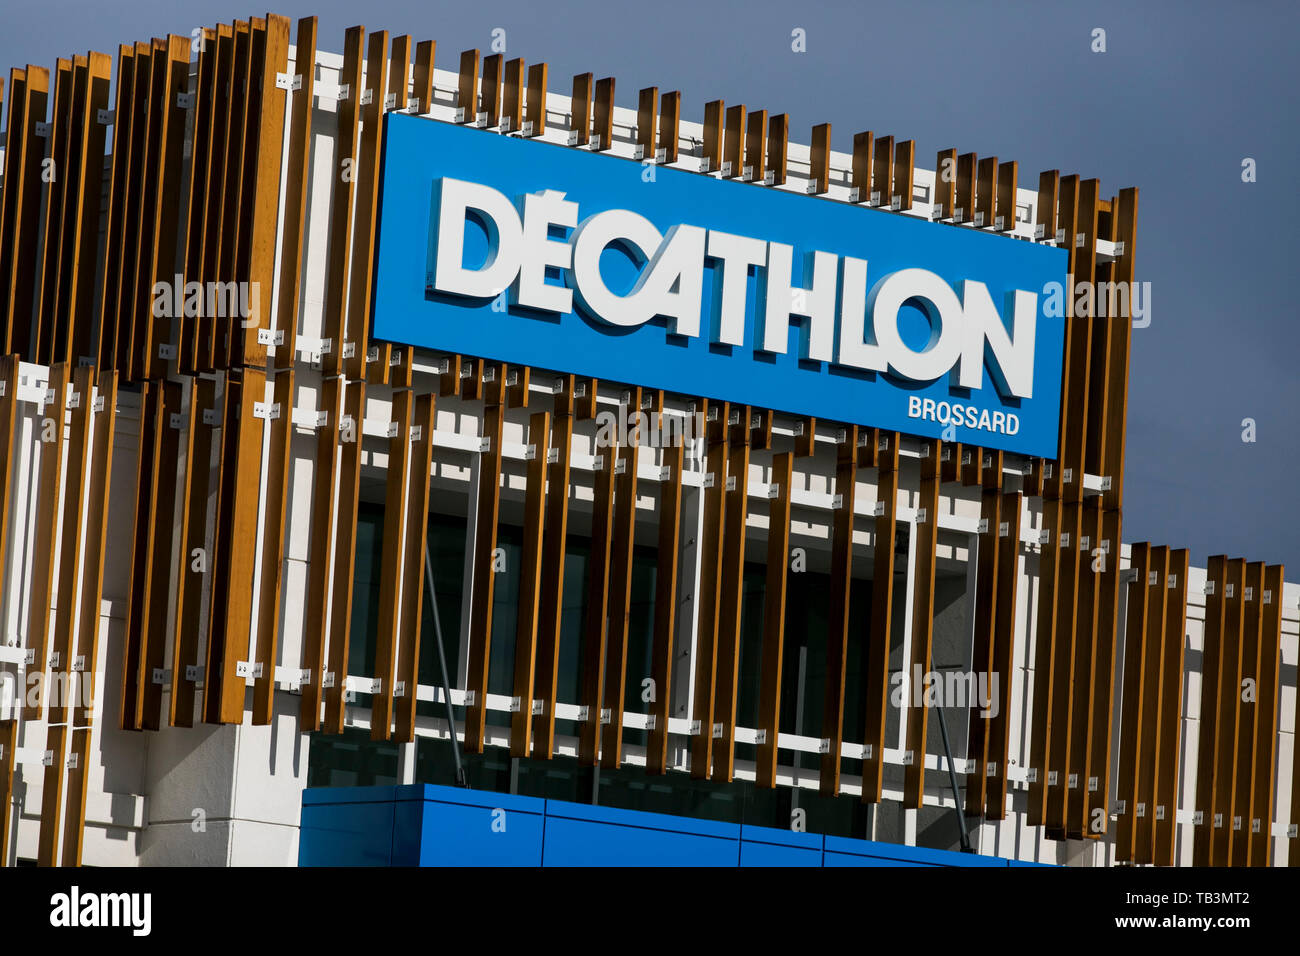 decathlon brand names